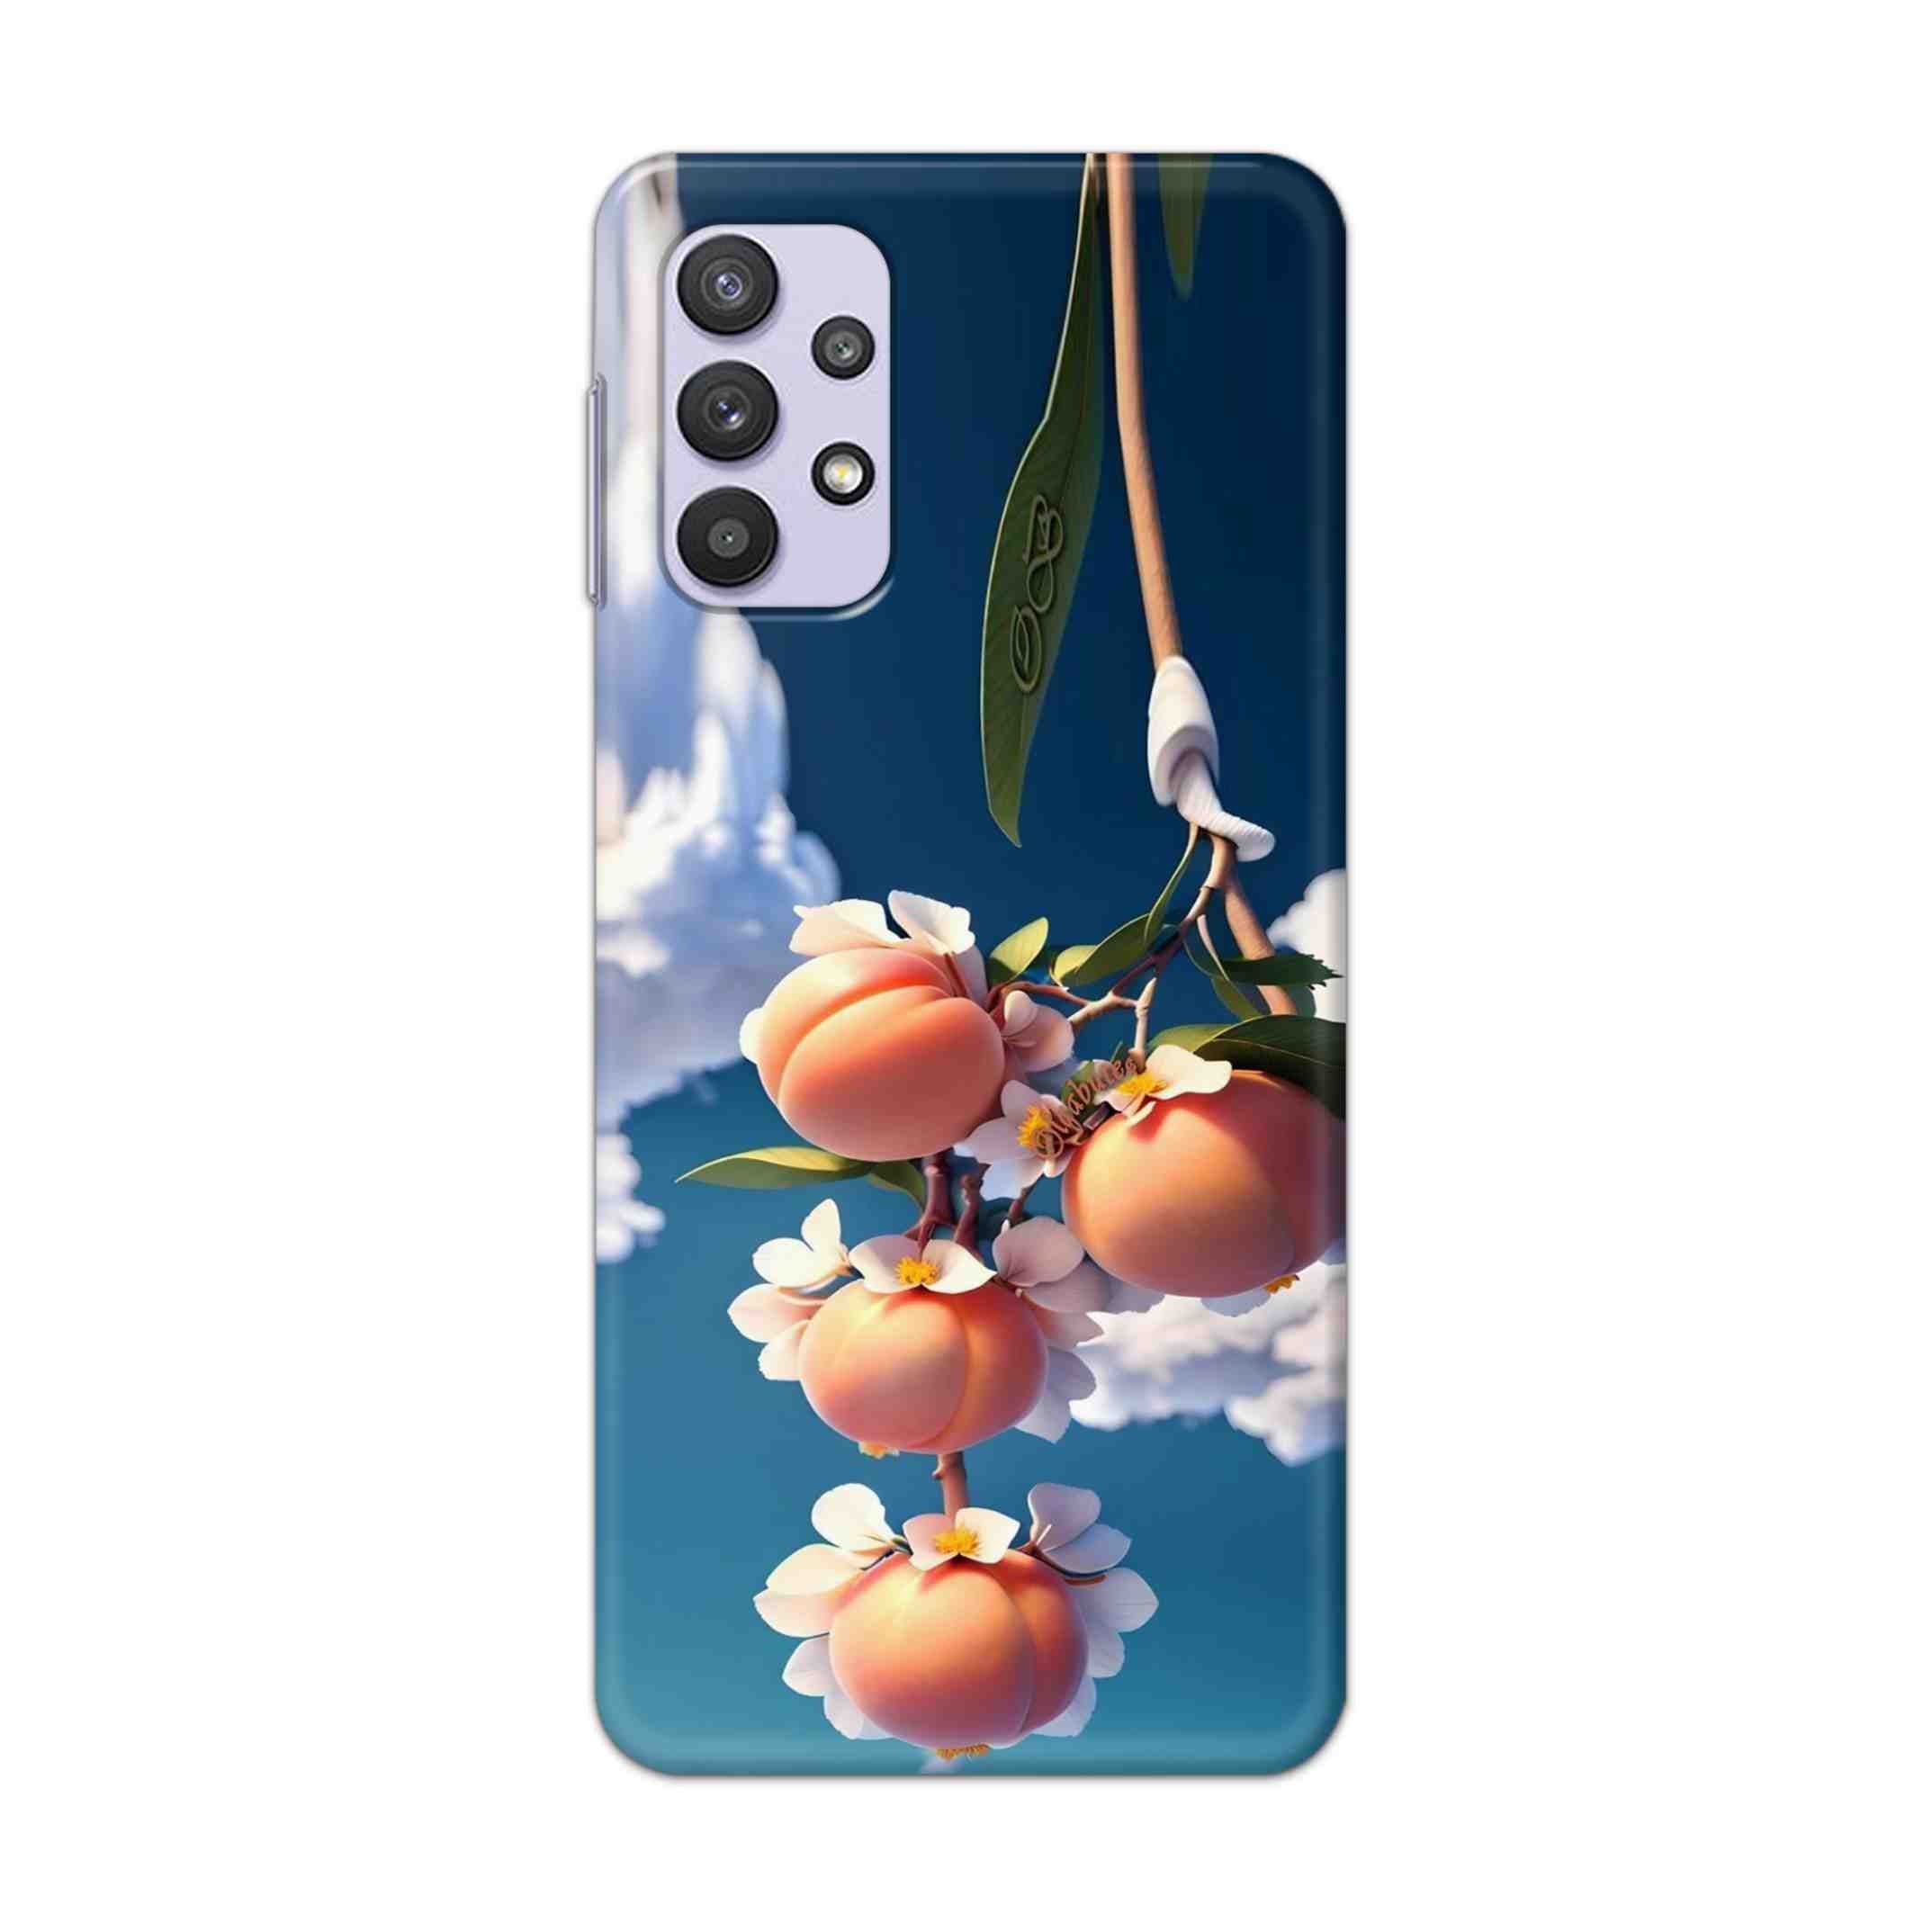 Buy Fruit Hard Back Mobile Phone Case Cover For Samsung A32 4G Online